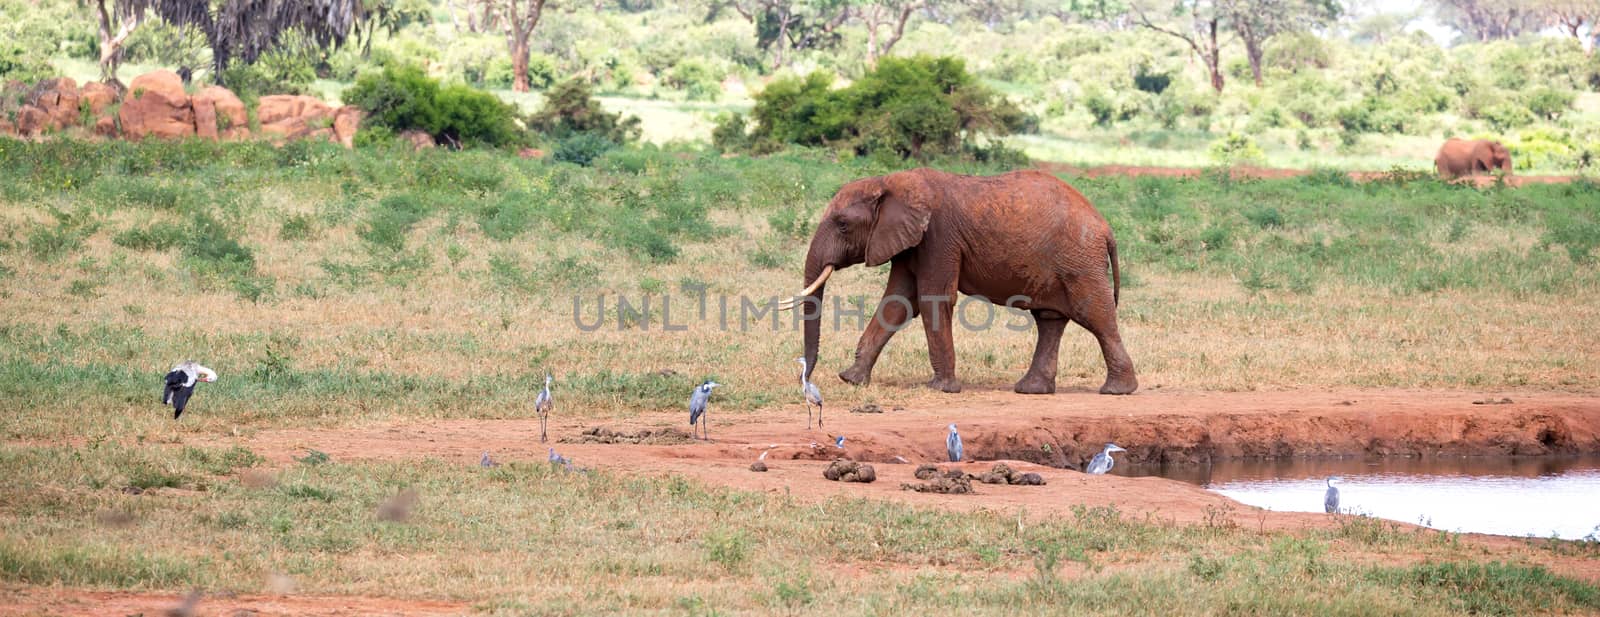 An elephant on the waterhole in the savannah of Kenya by 25ehaag6